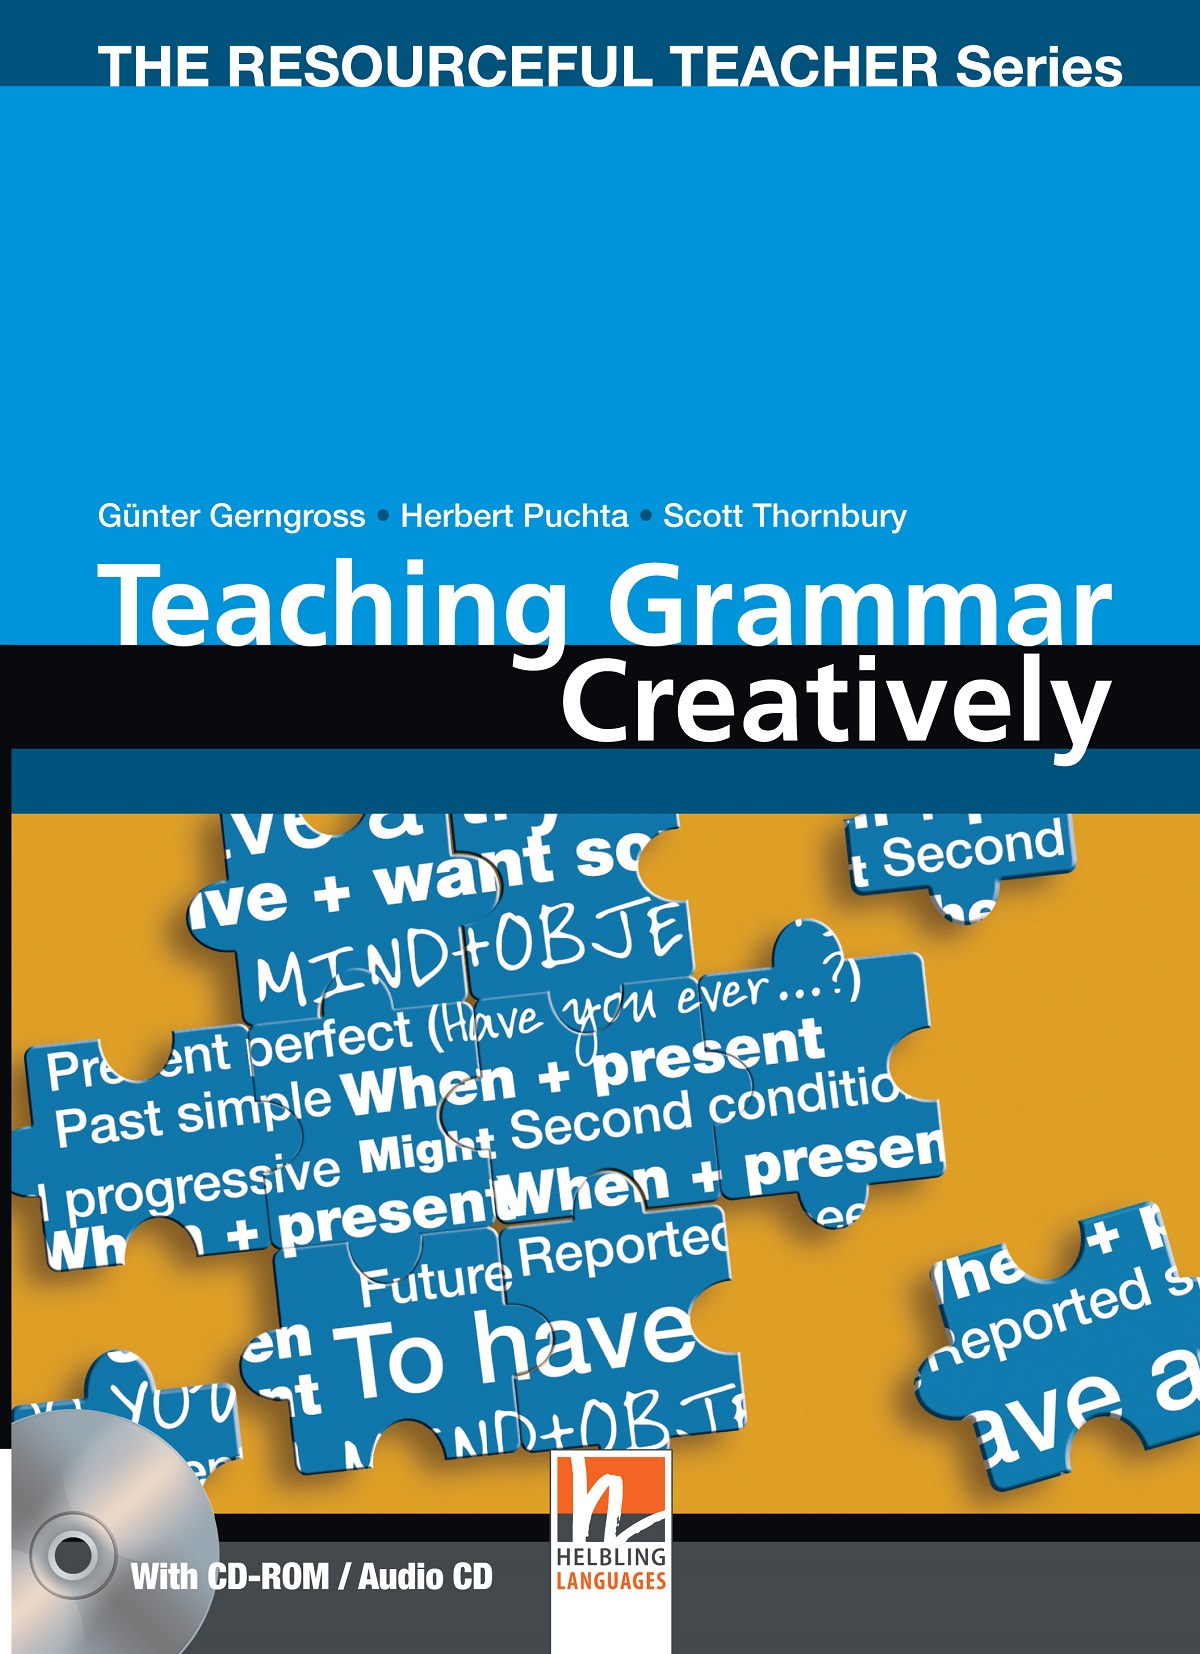 research on teaching grammar